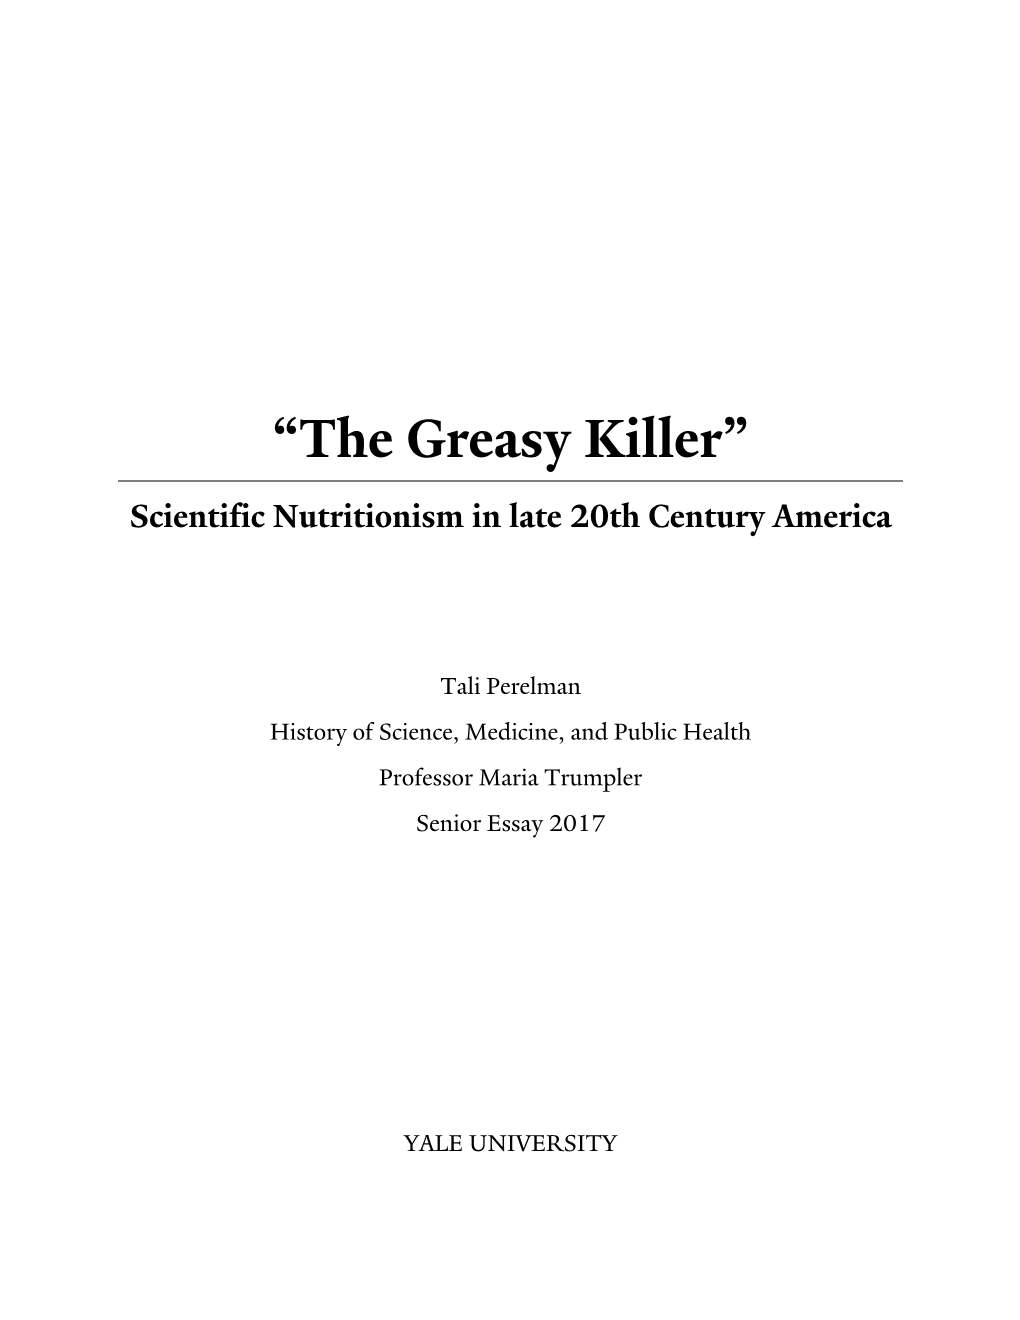 “The Greasy Killer” Scientific Nutritionism in Late 20Th Century America